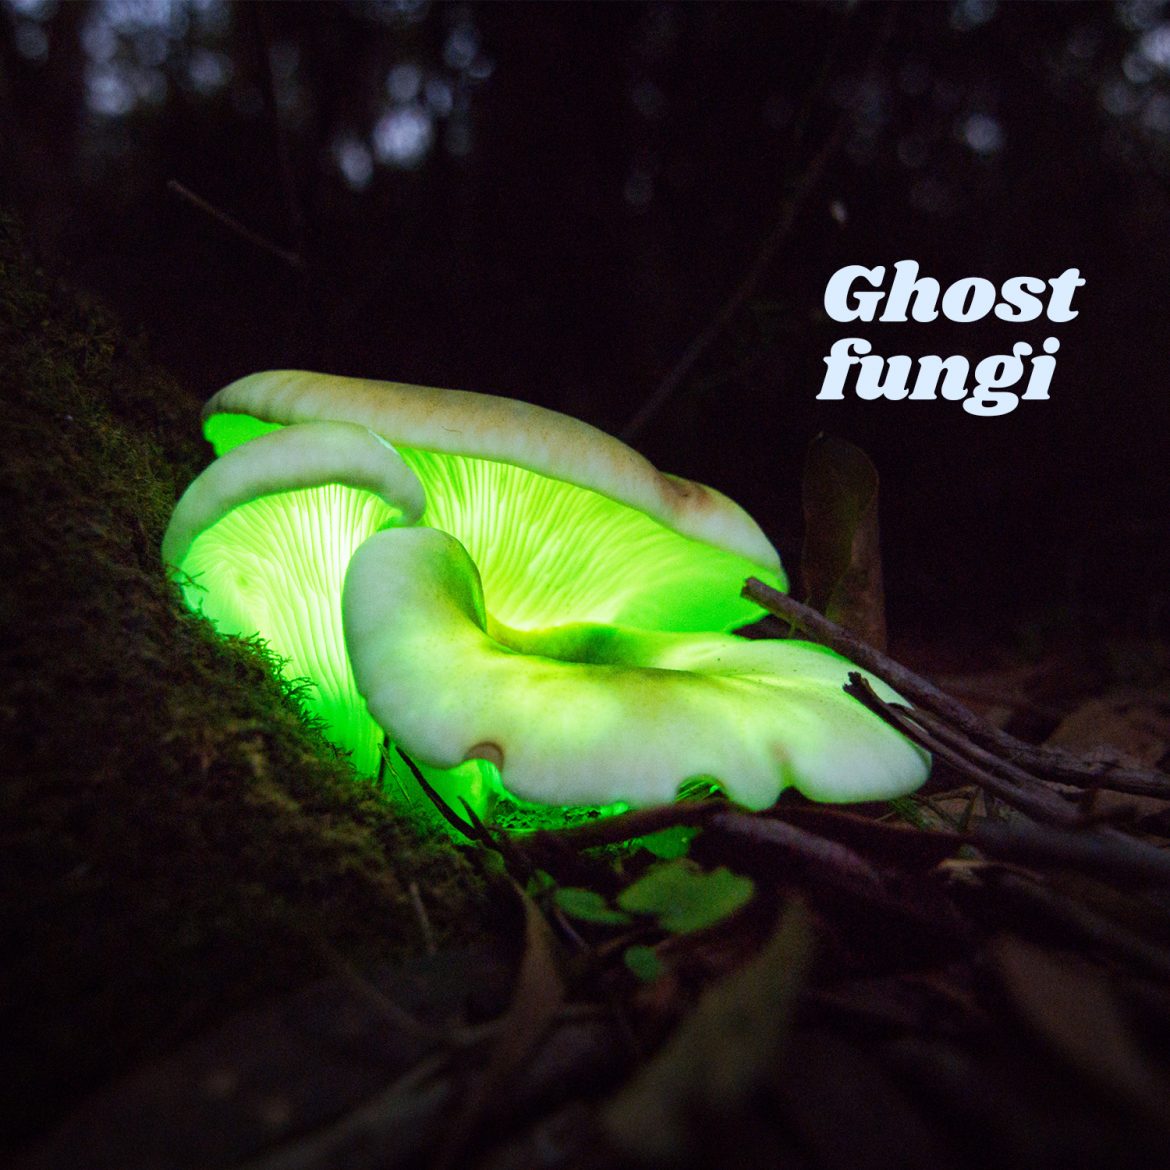 Ghost fungi